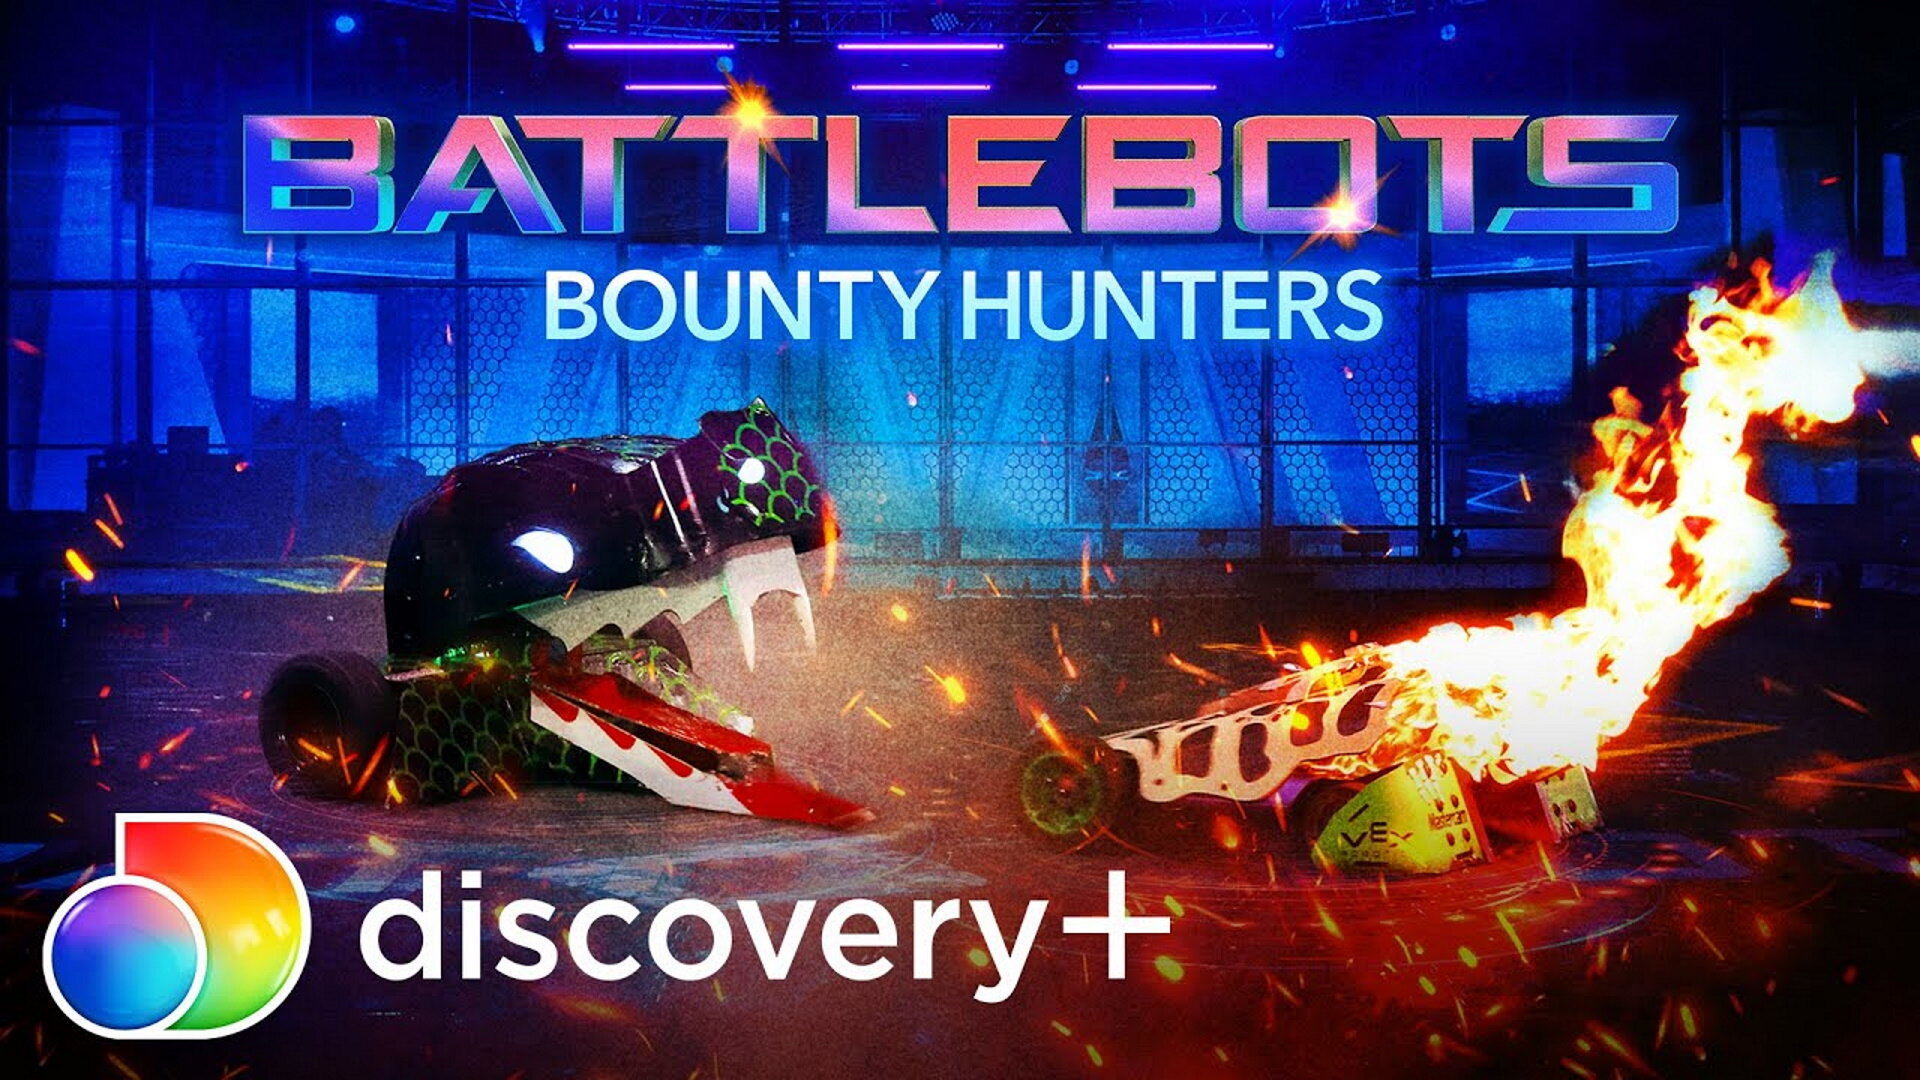 battlebots bounty hunters